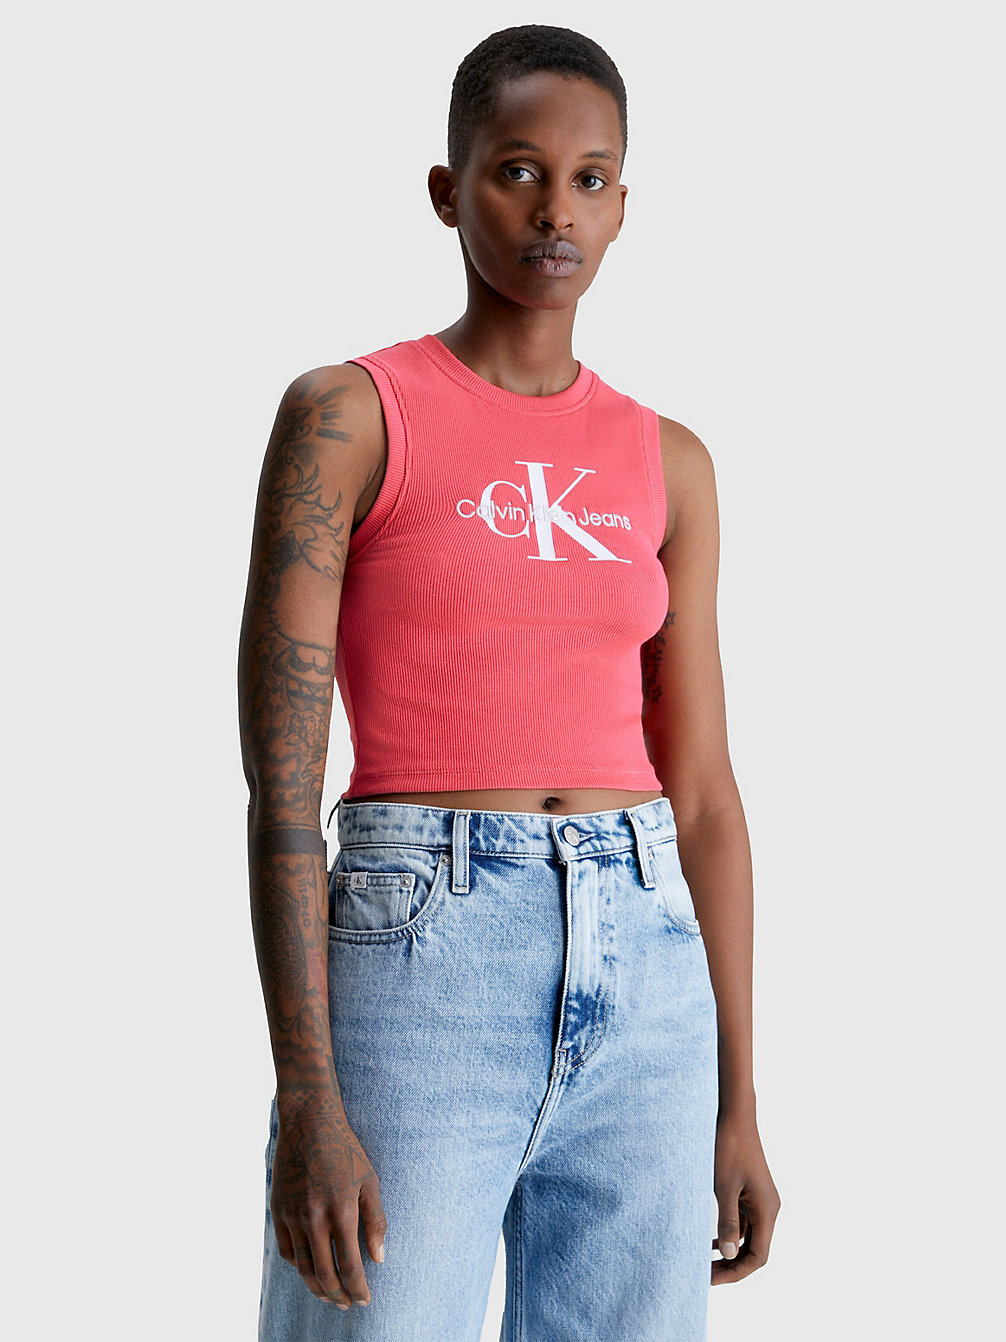 Camiseta De Tirantes Cropped Con Monograma > PINK FLASH > undefined mujer > Calvin Klein